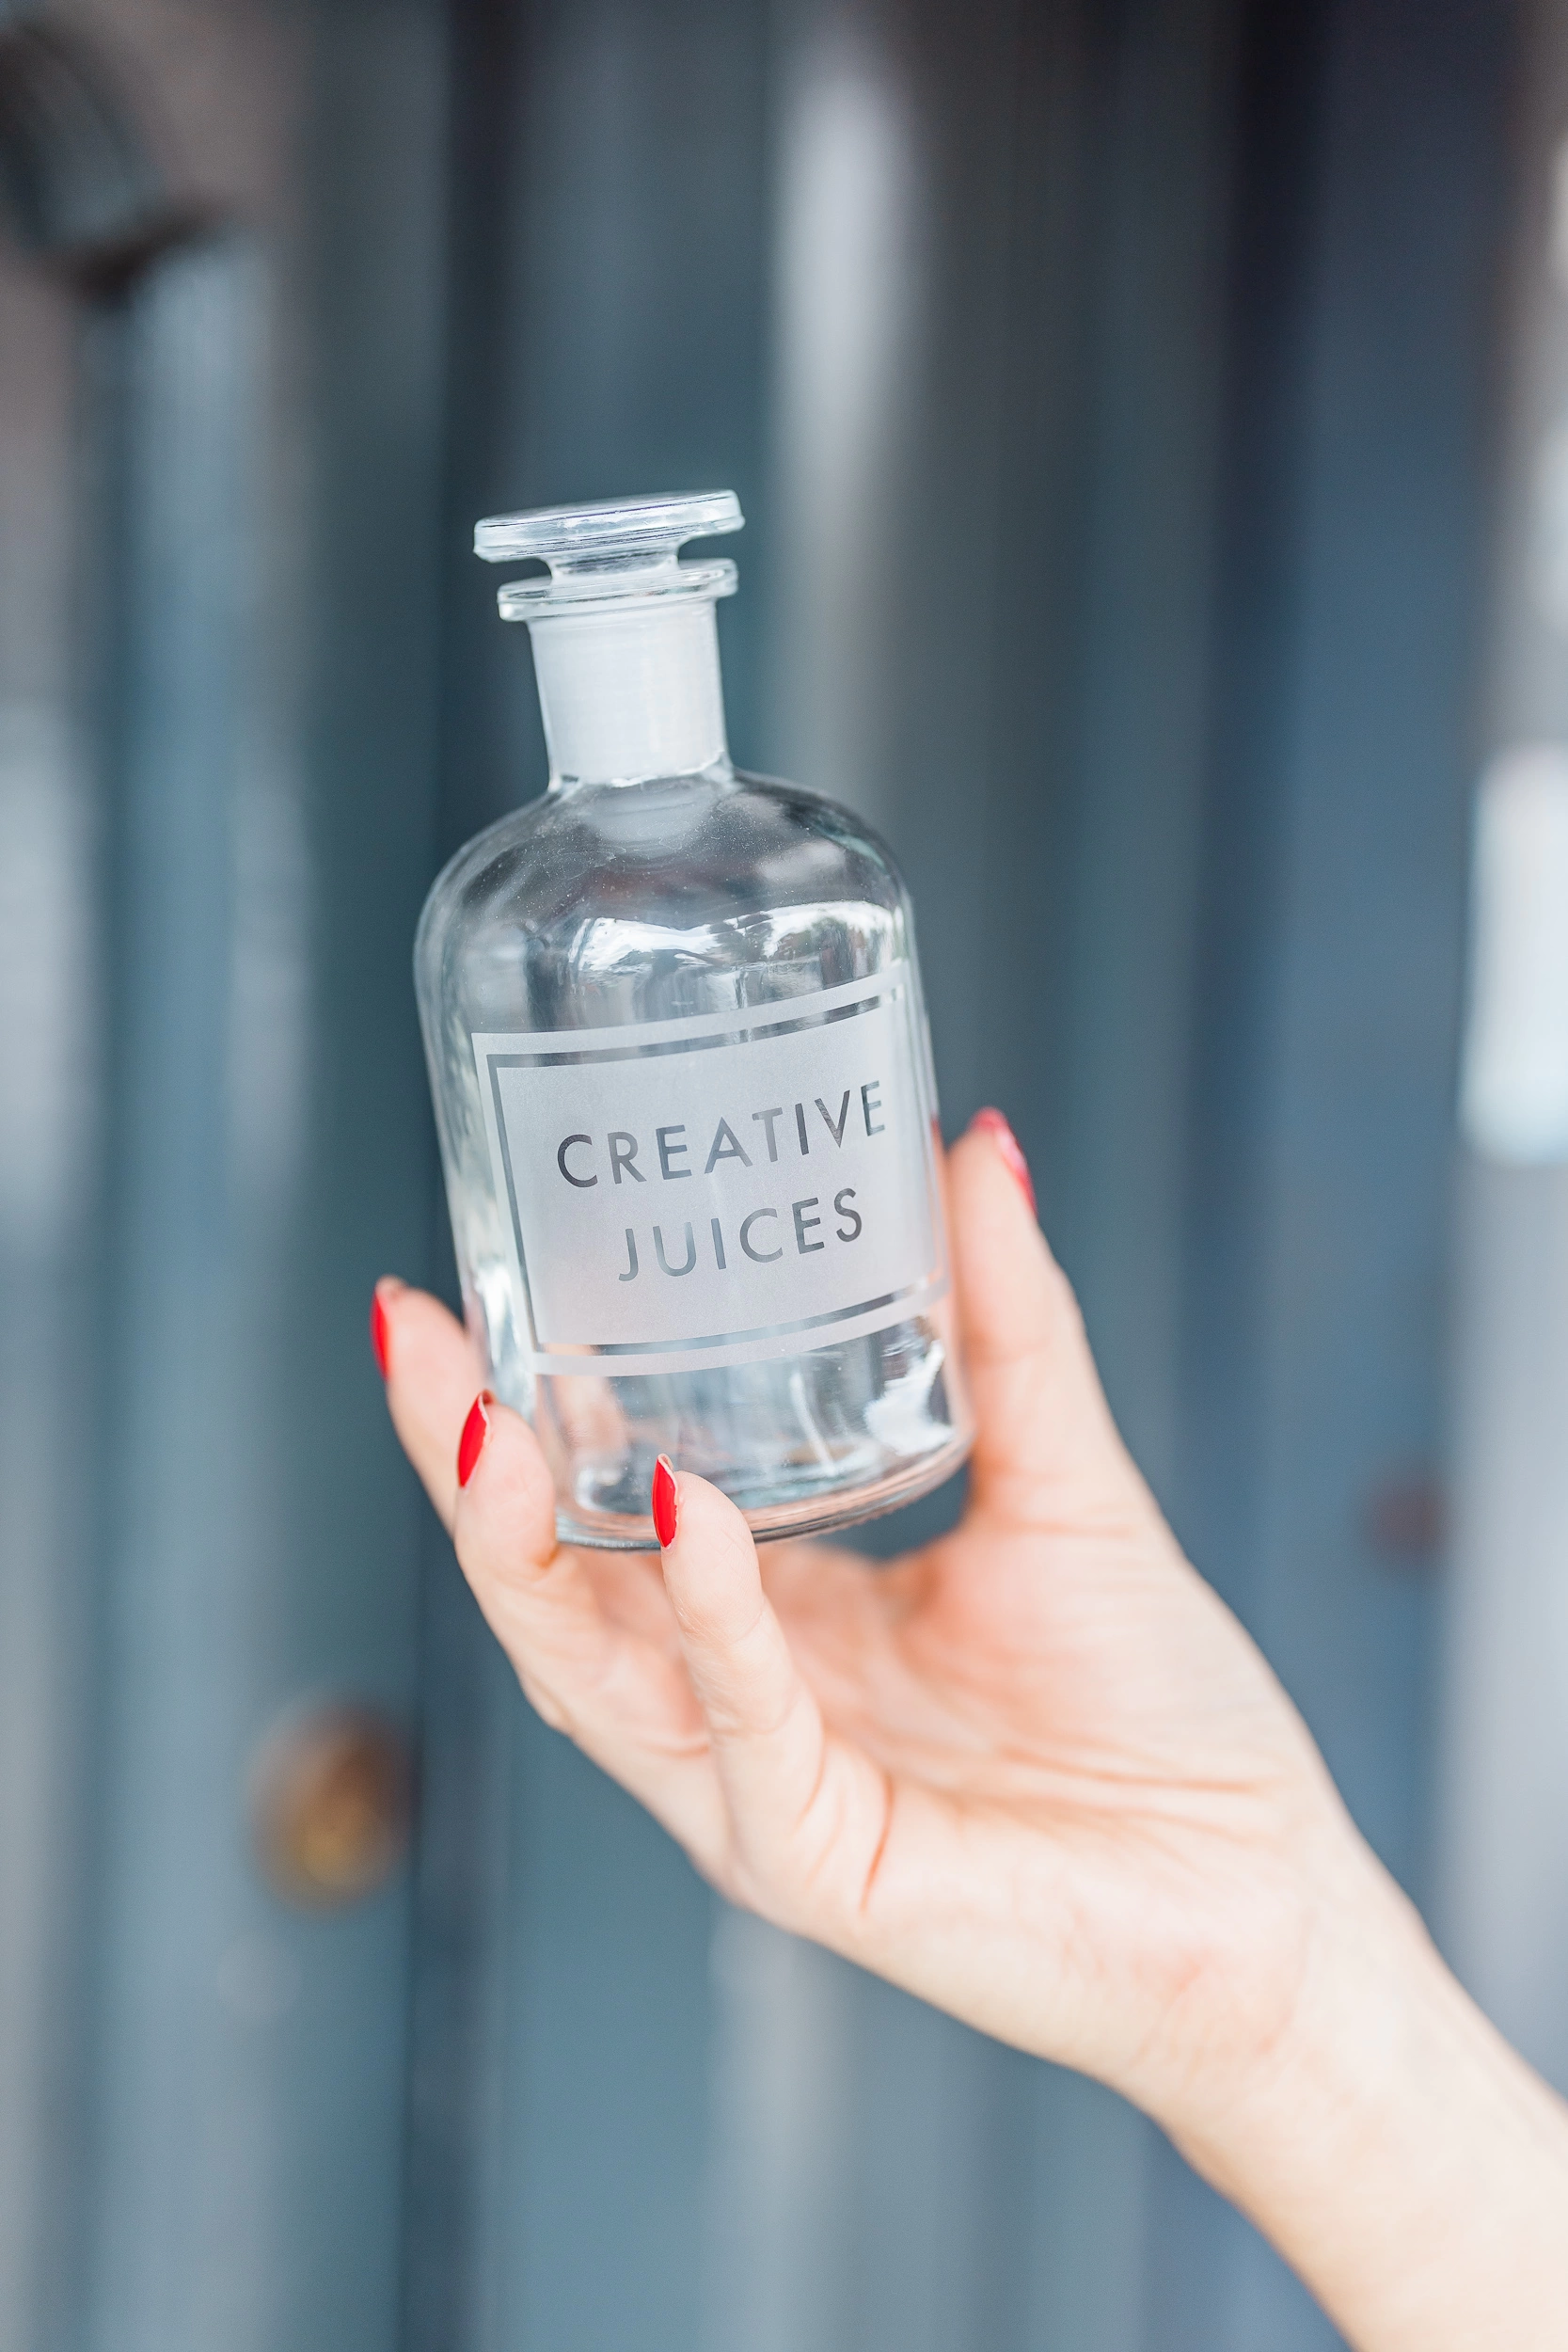 Creative juices bottle